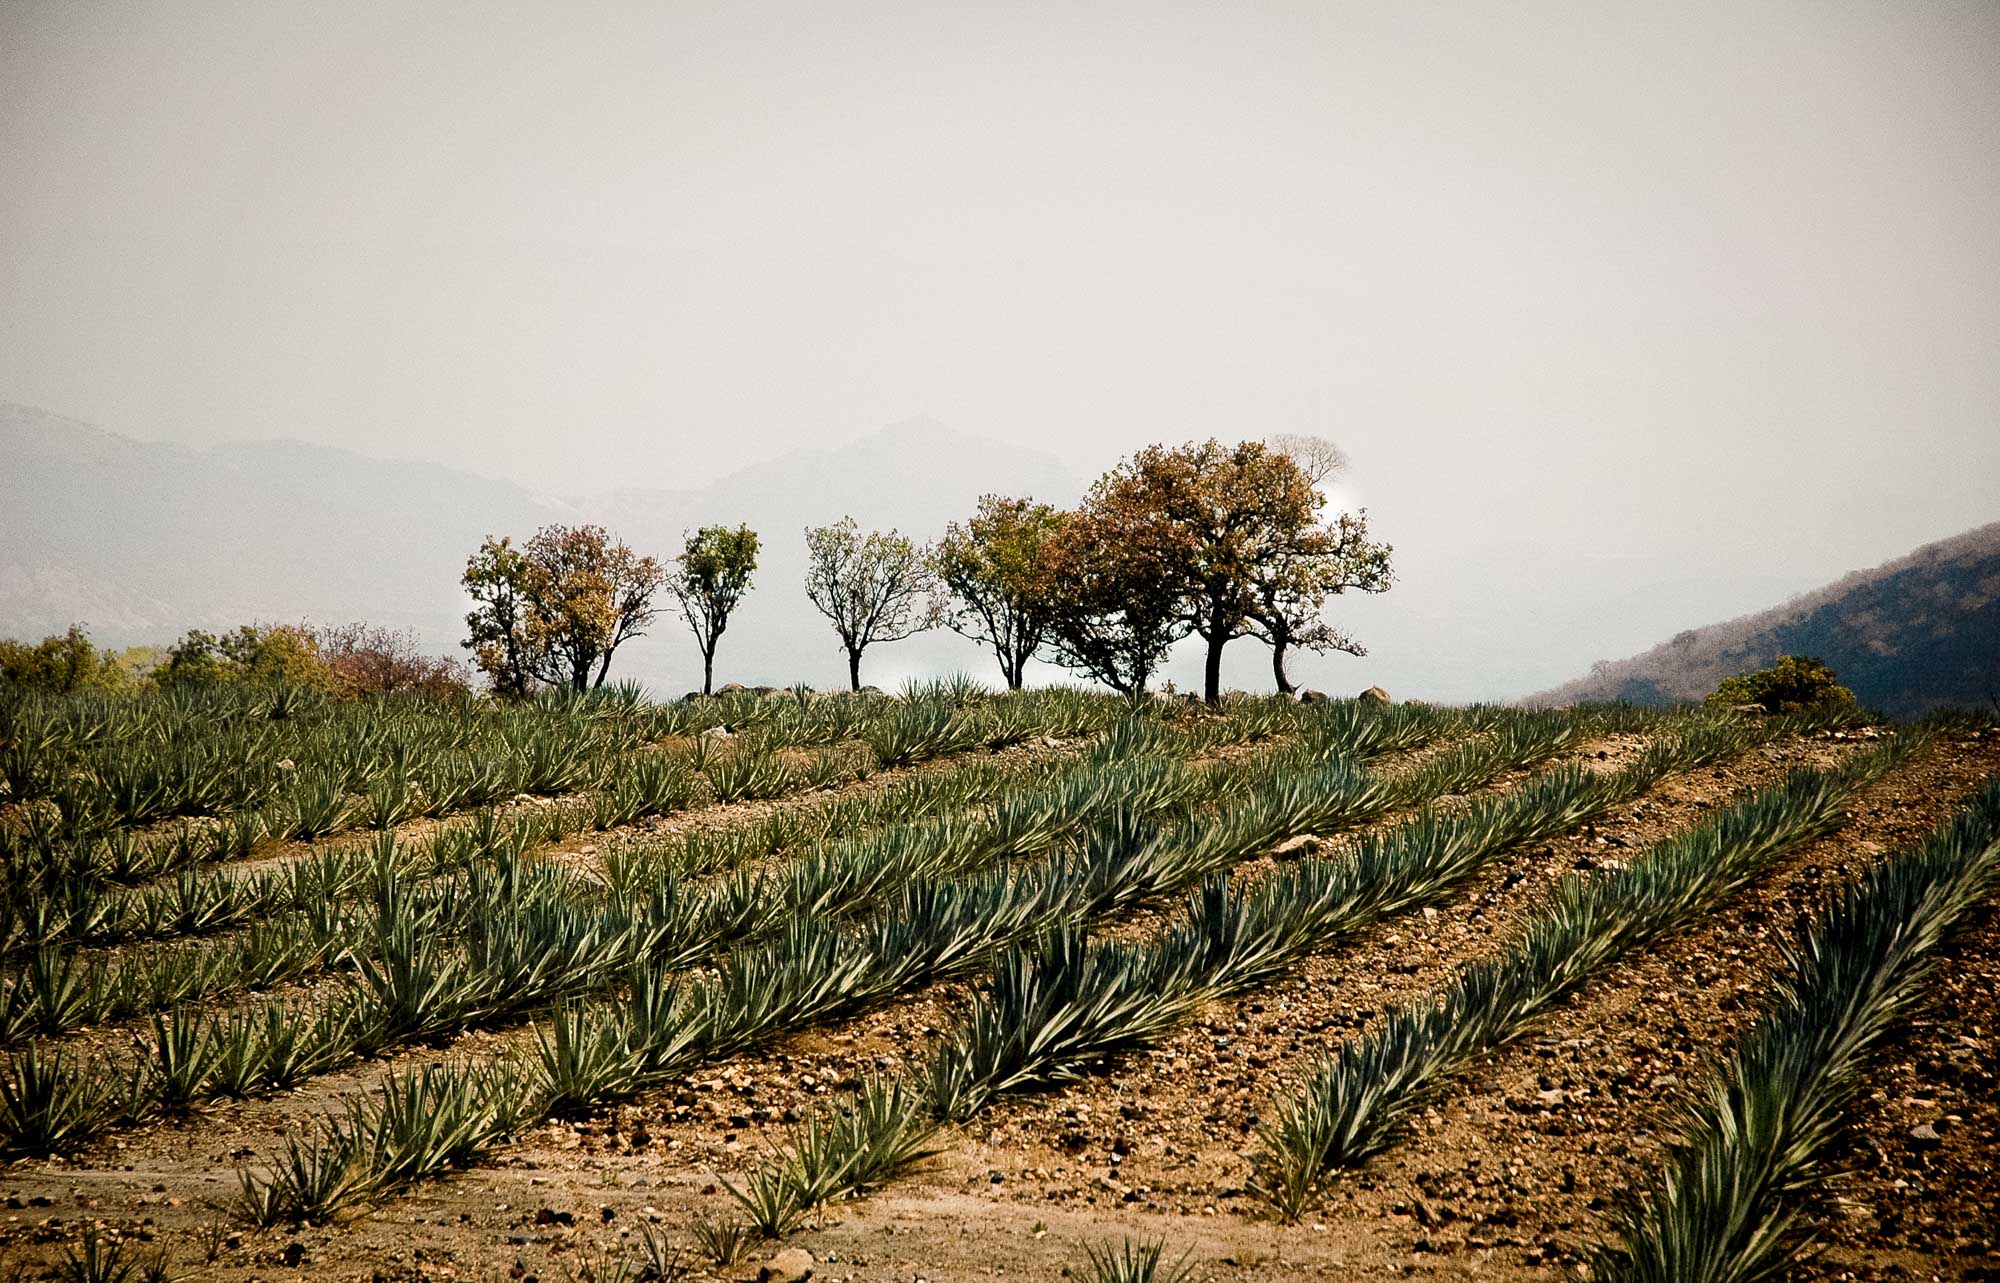  ‘Succulent Mexico’ Series | Mexico 